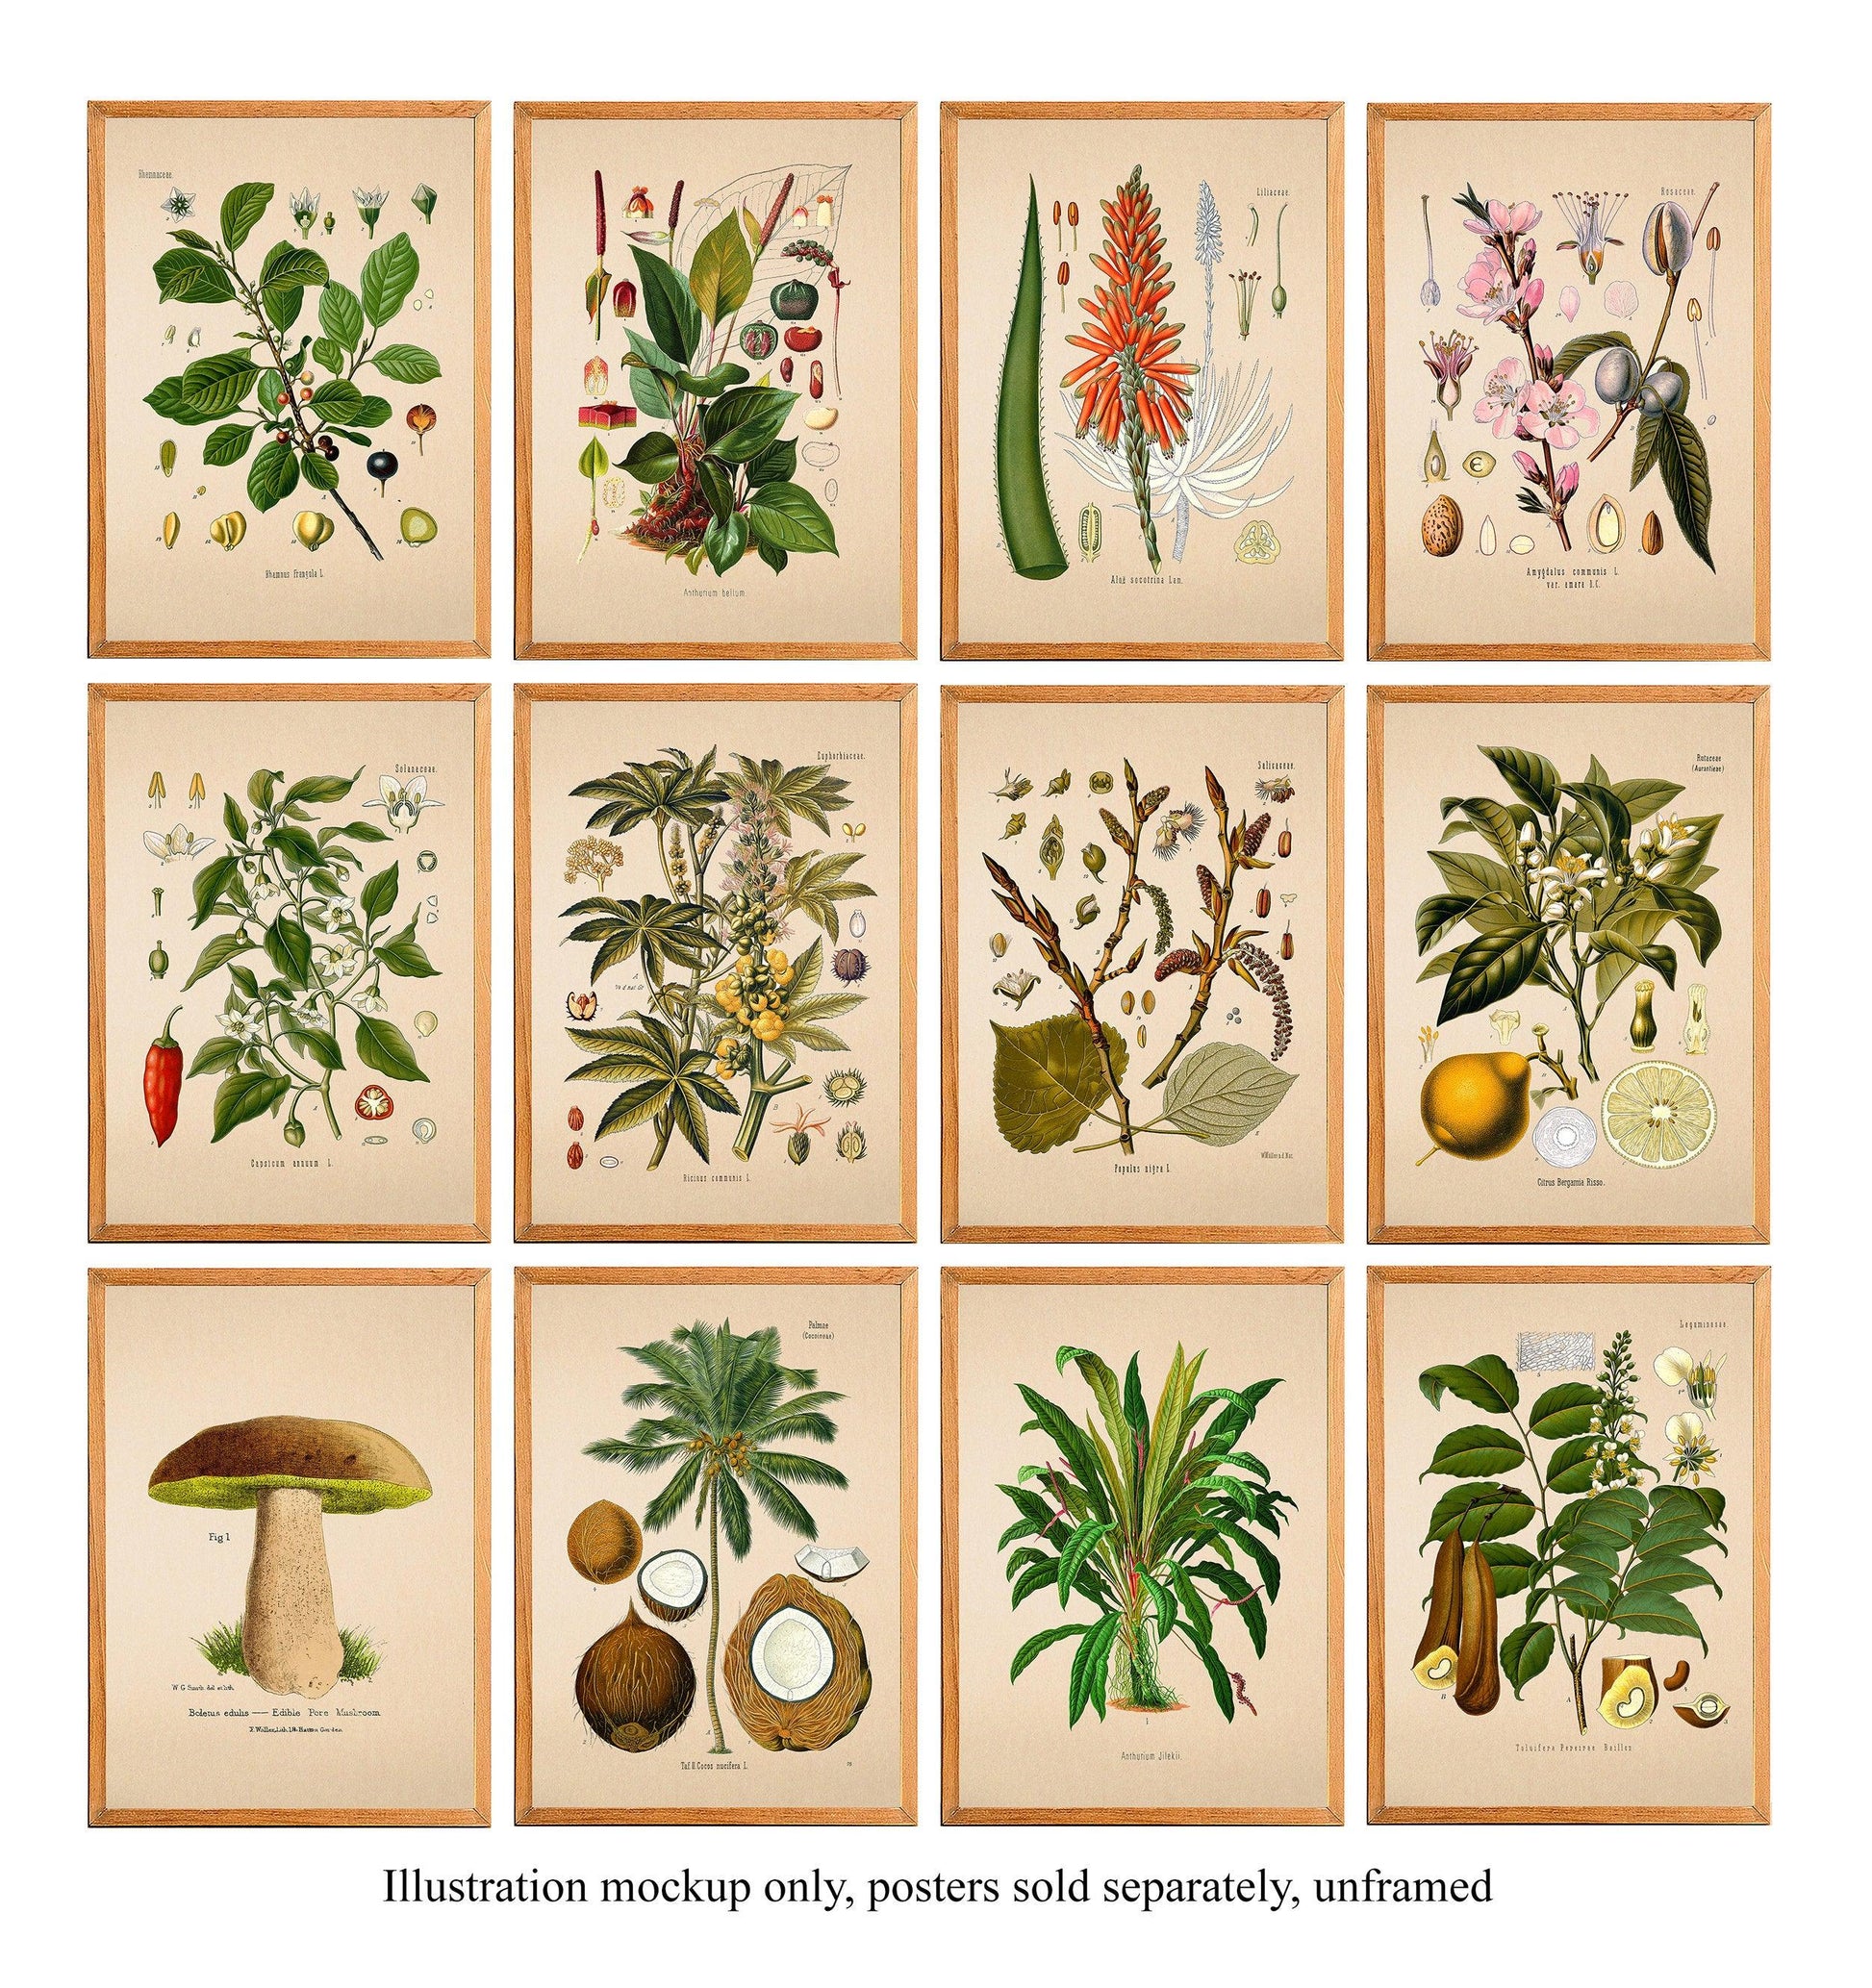 Atimeta Filamentosa - Antique Botanical Poster - Classic Posters